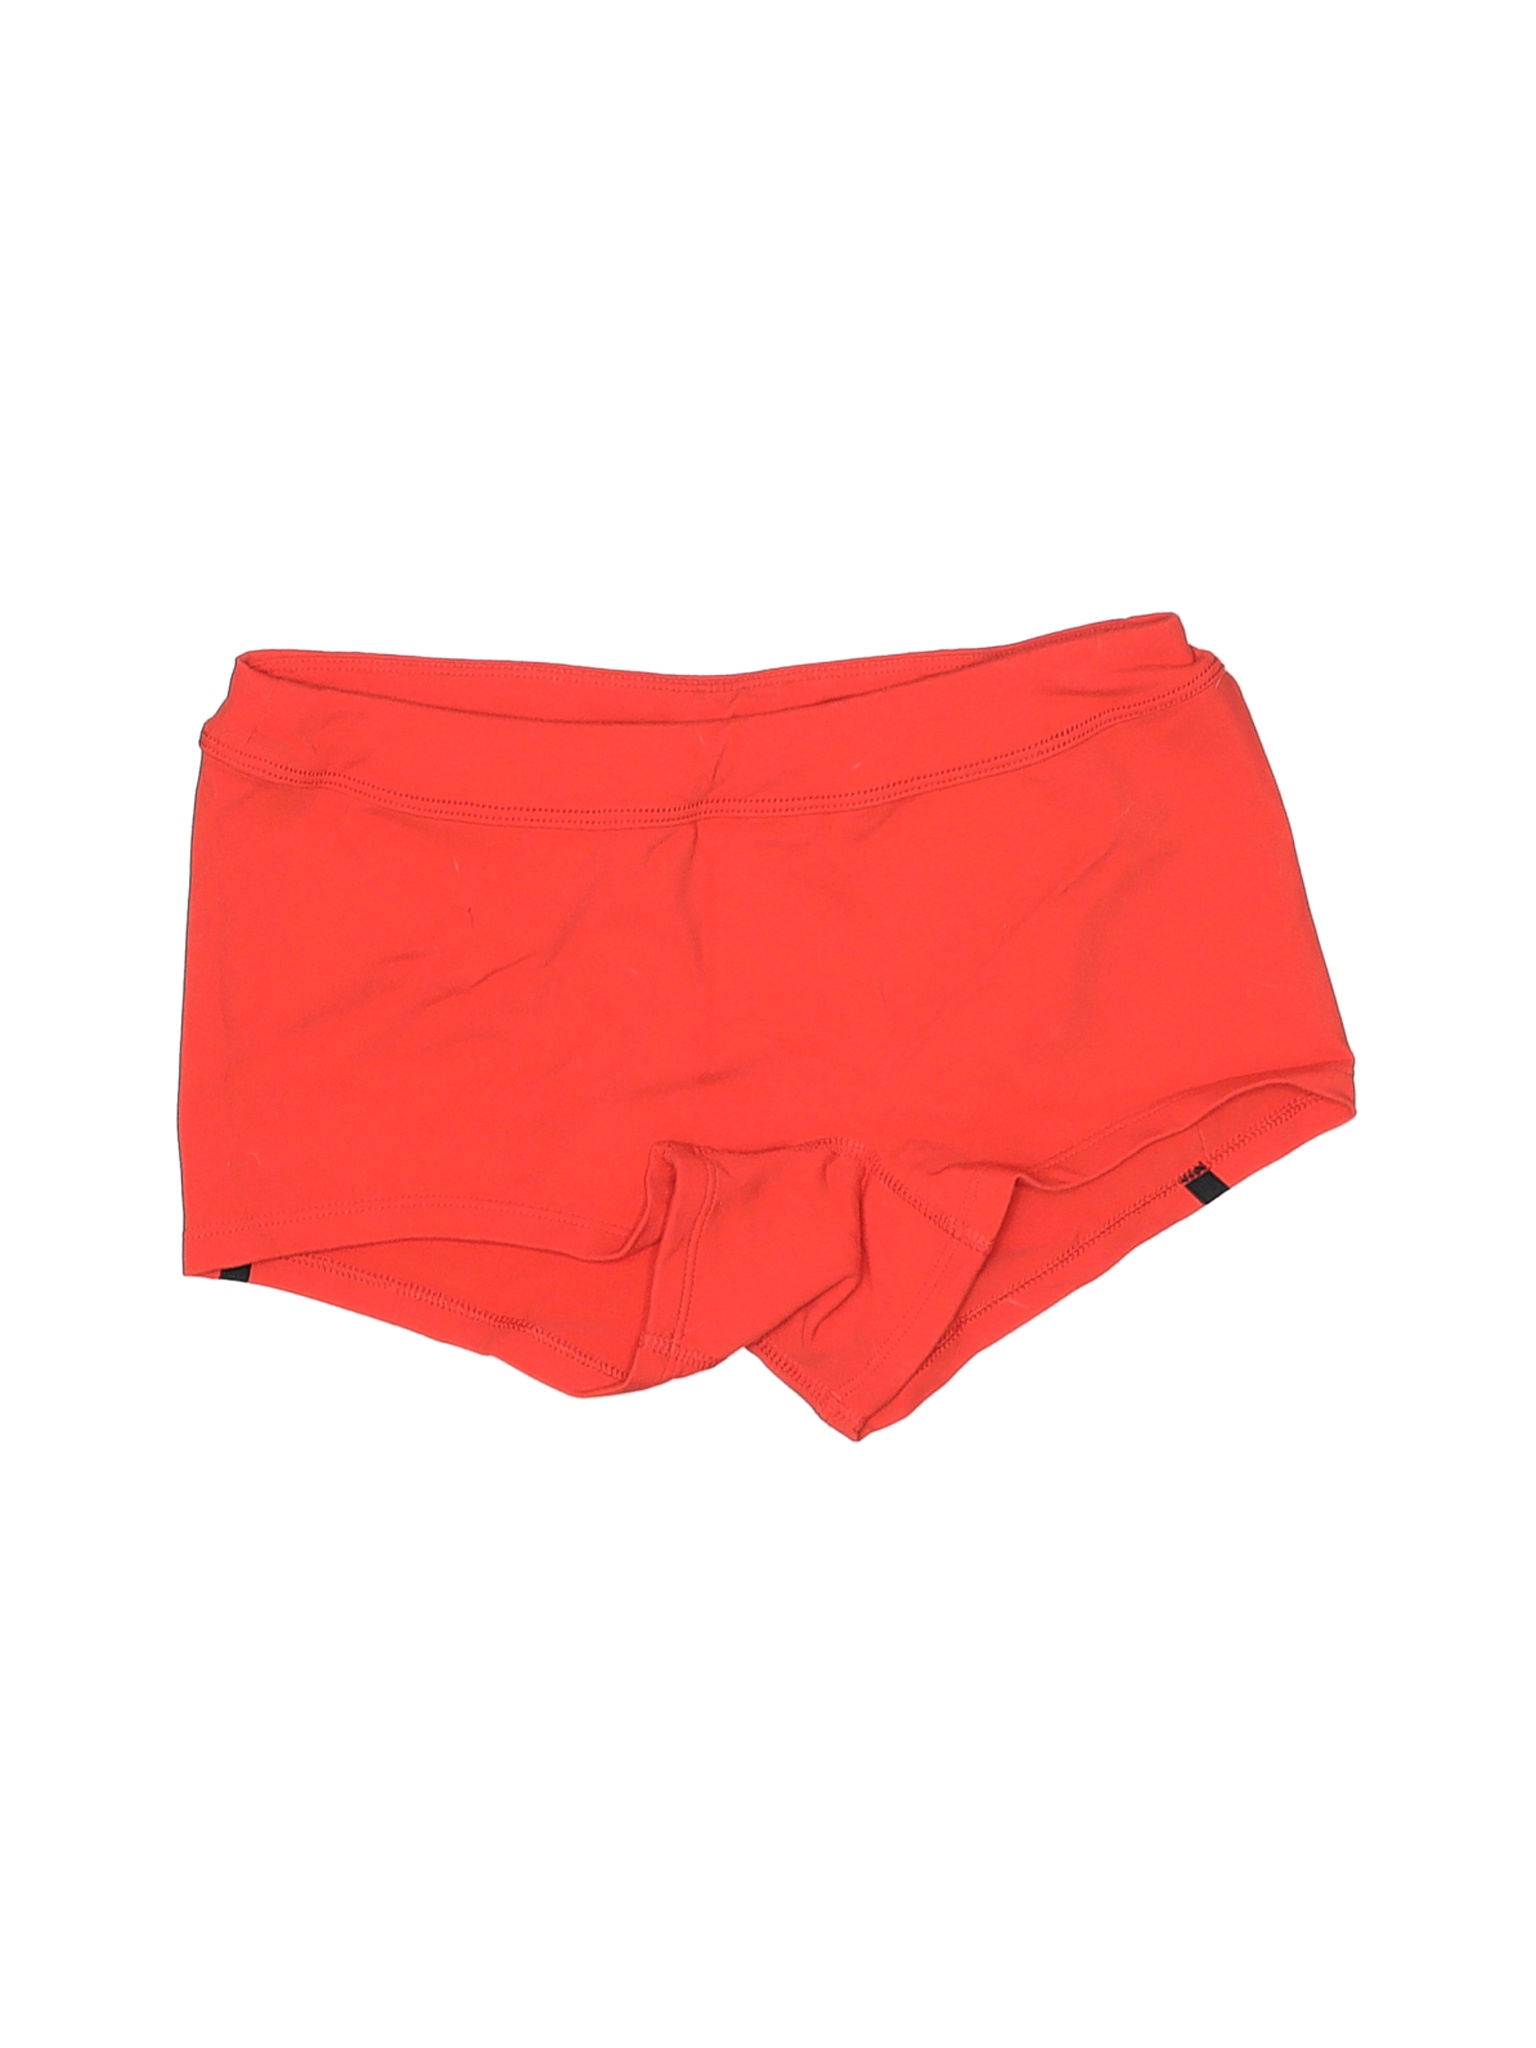 Reebok Women Orange Athletic Shorts S | eBay